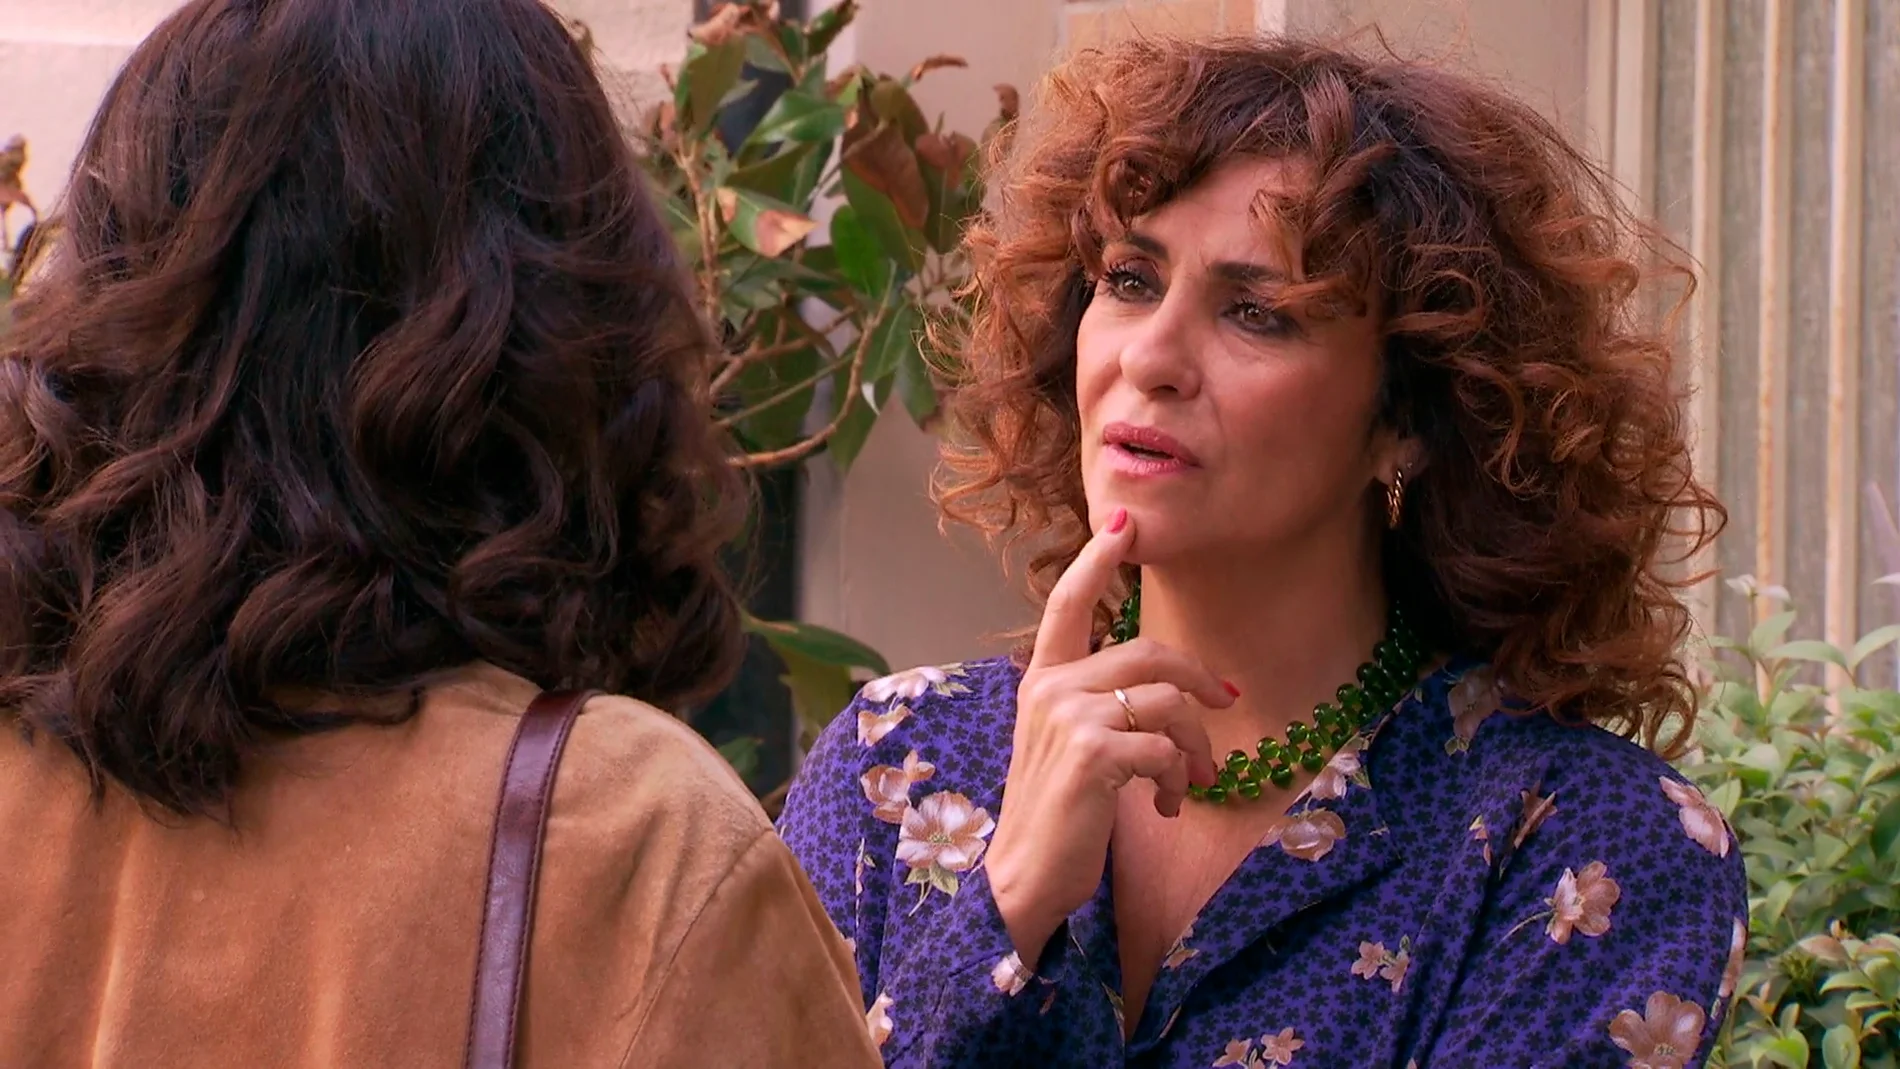 La dura advertencia de Nieves a Cristina: “Deja de molestar a Andrea”